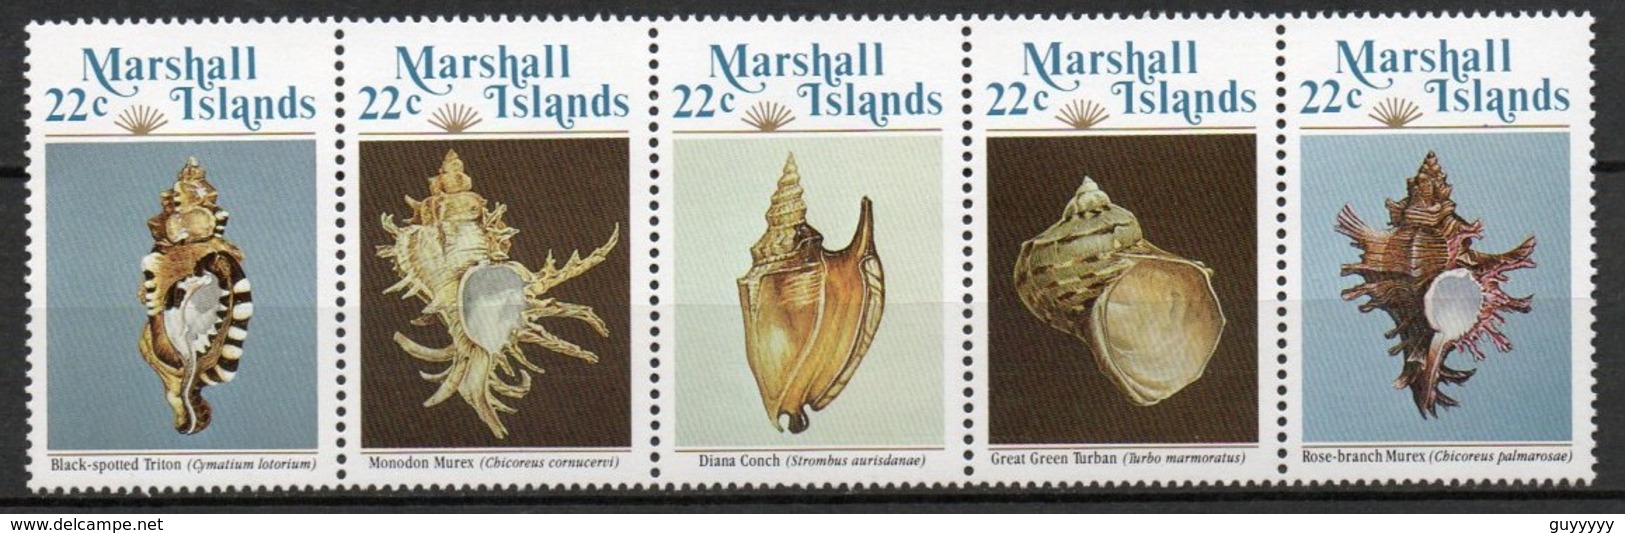 Iles Marshall - 1985 - Yvert N° 73 à 77 **  - Coquillages - Marshall